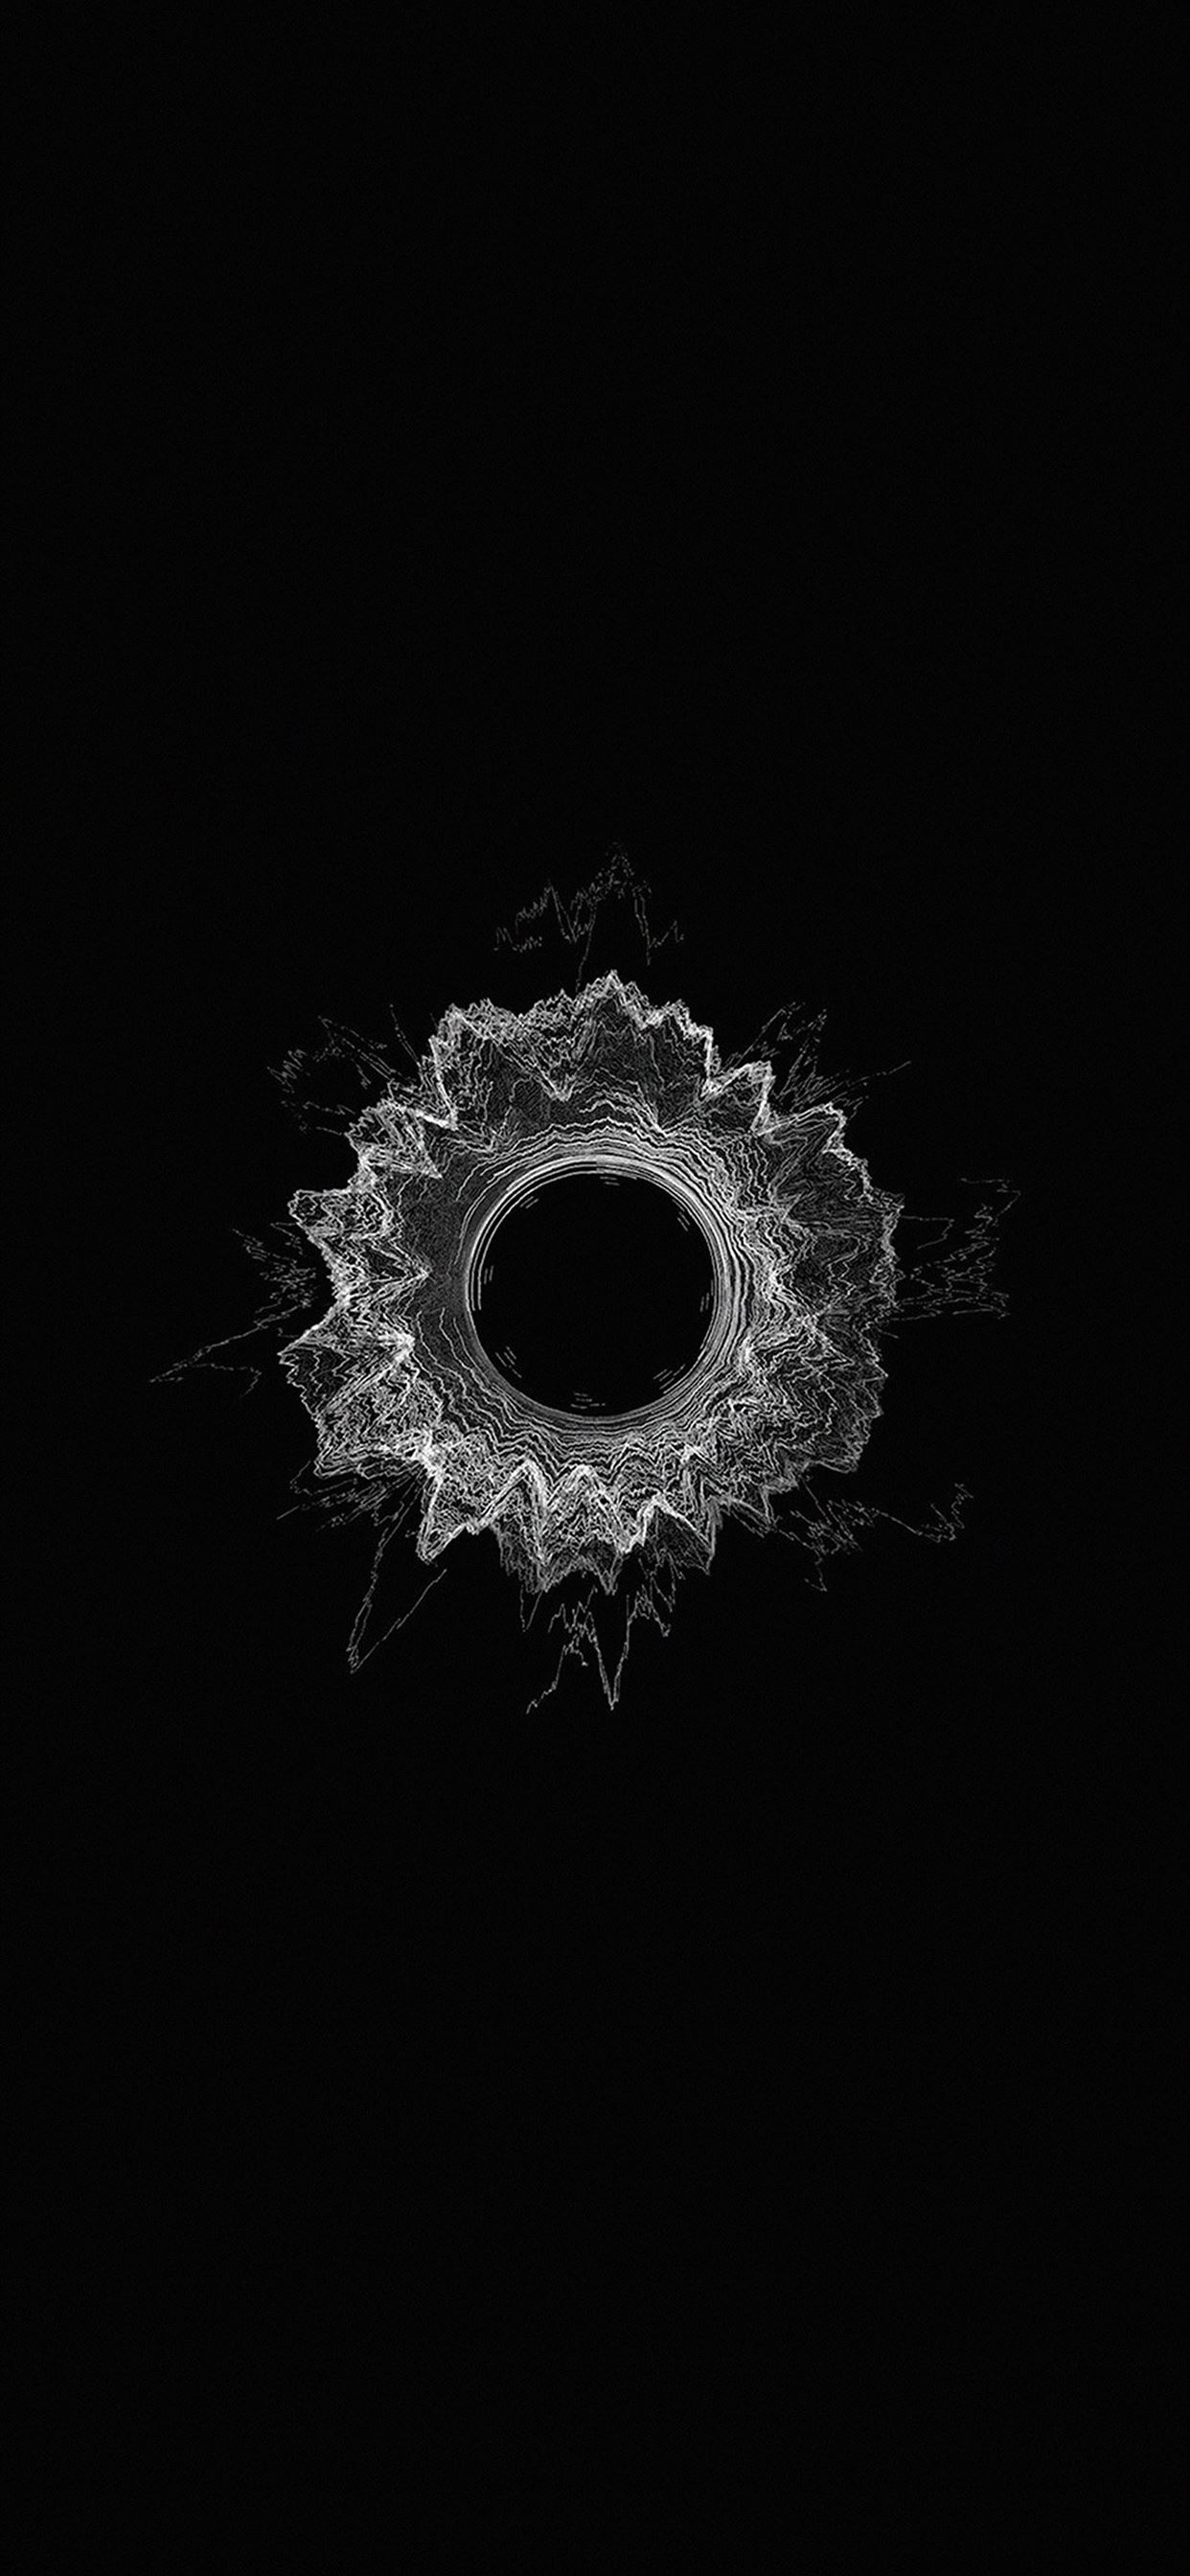 Dark hole black minimal pattern background iphone x wallpapers free download